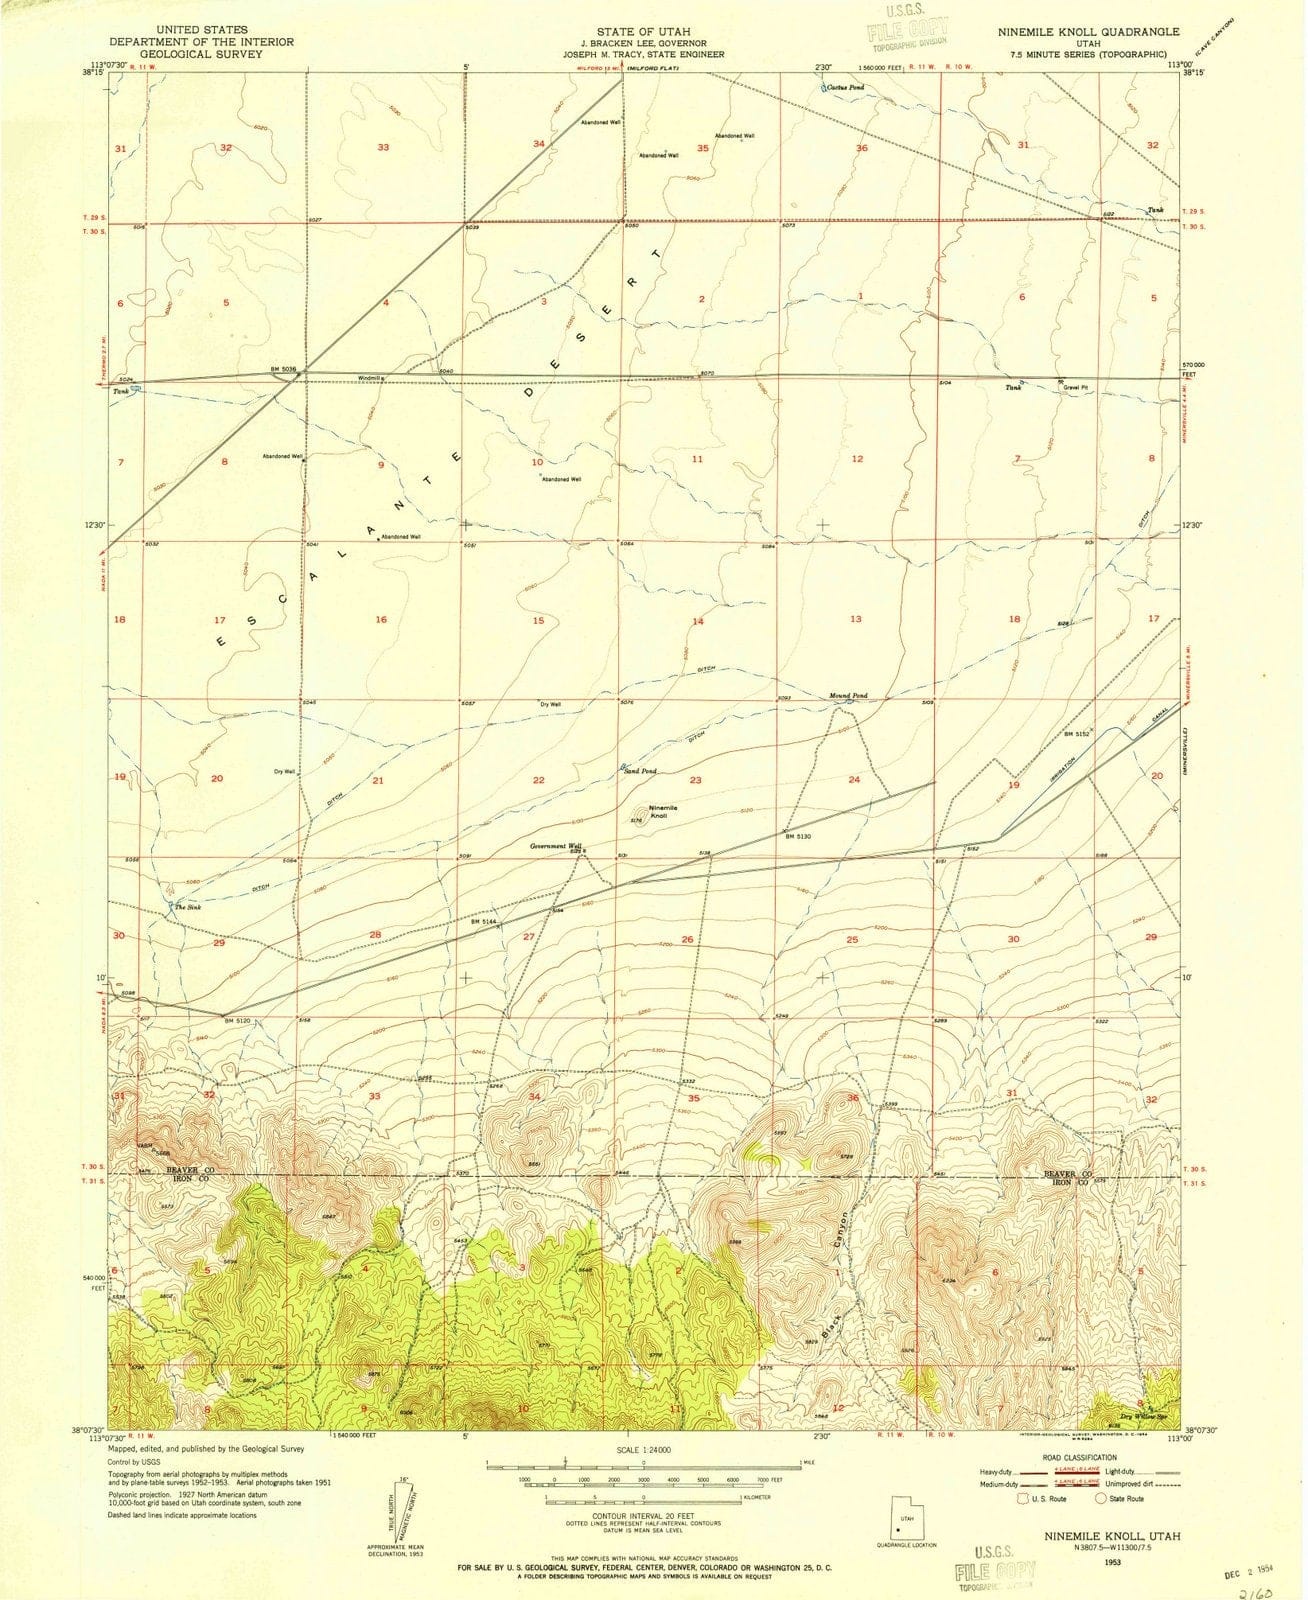 1953 Ninemile Knoll, UT - Utah - USGS Topographic Map